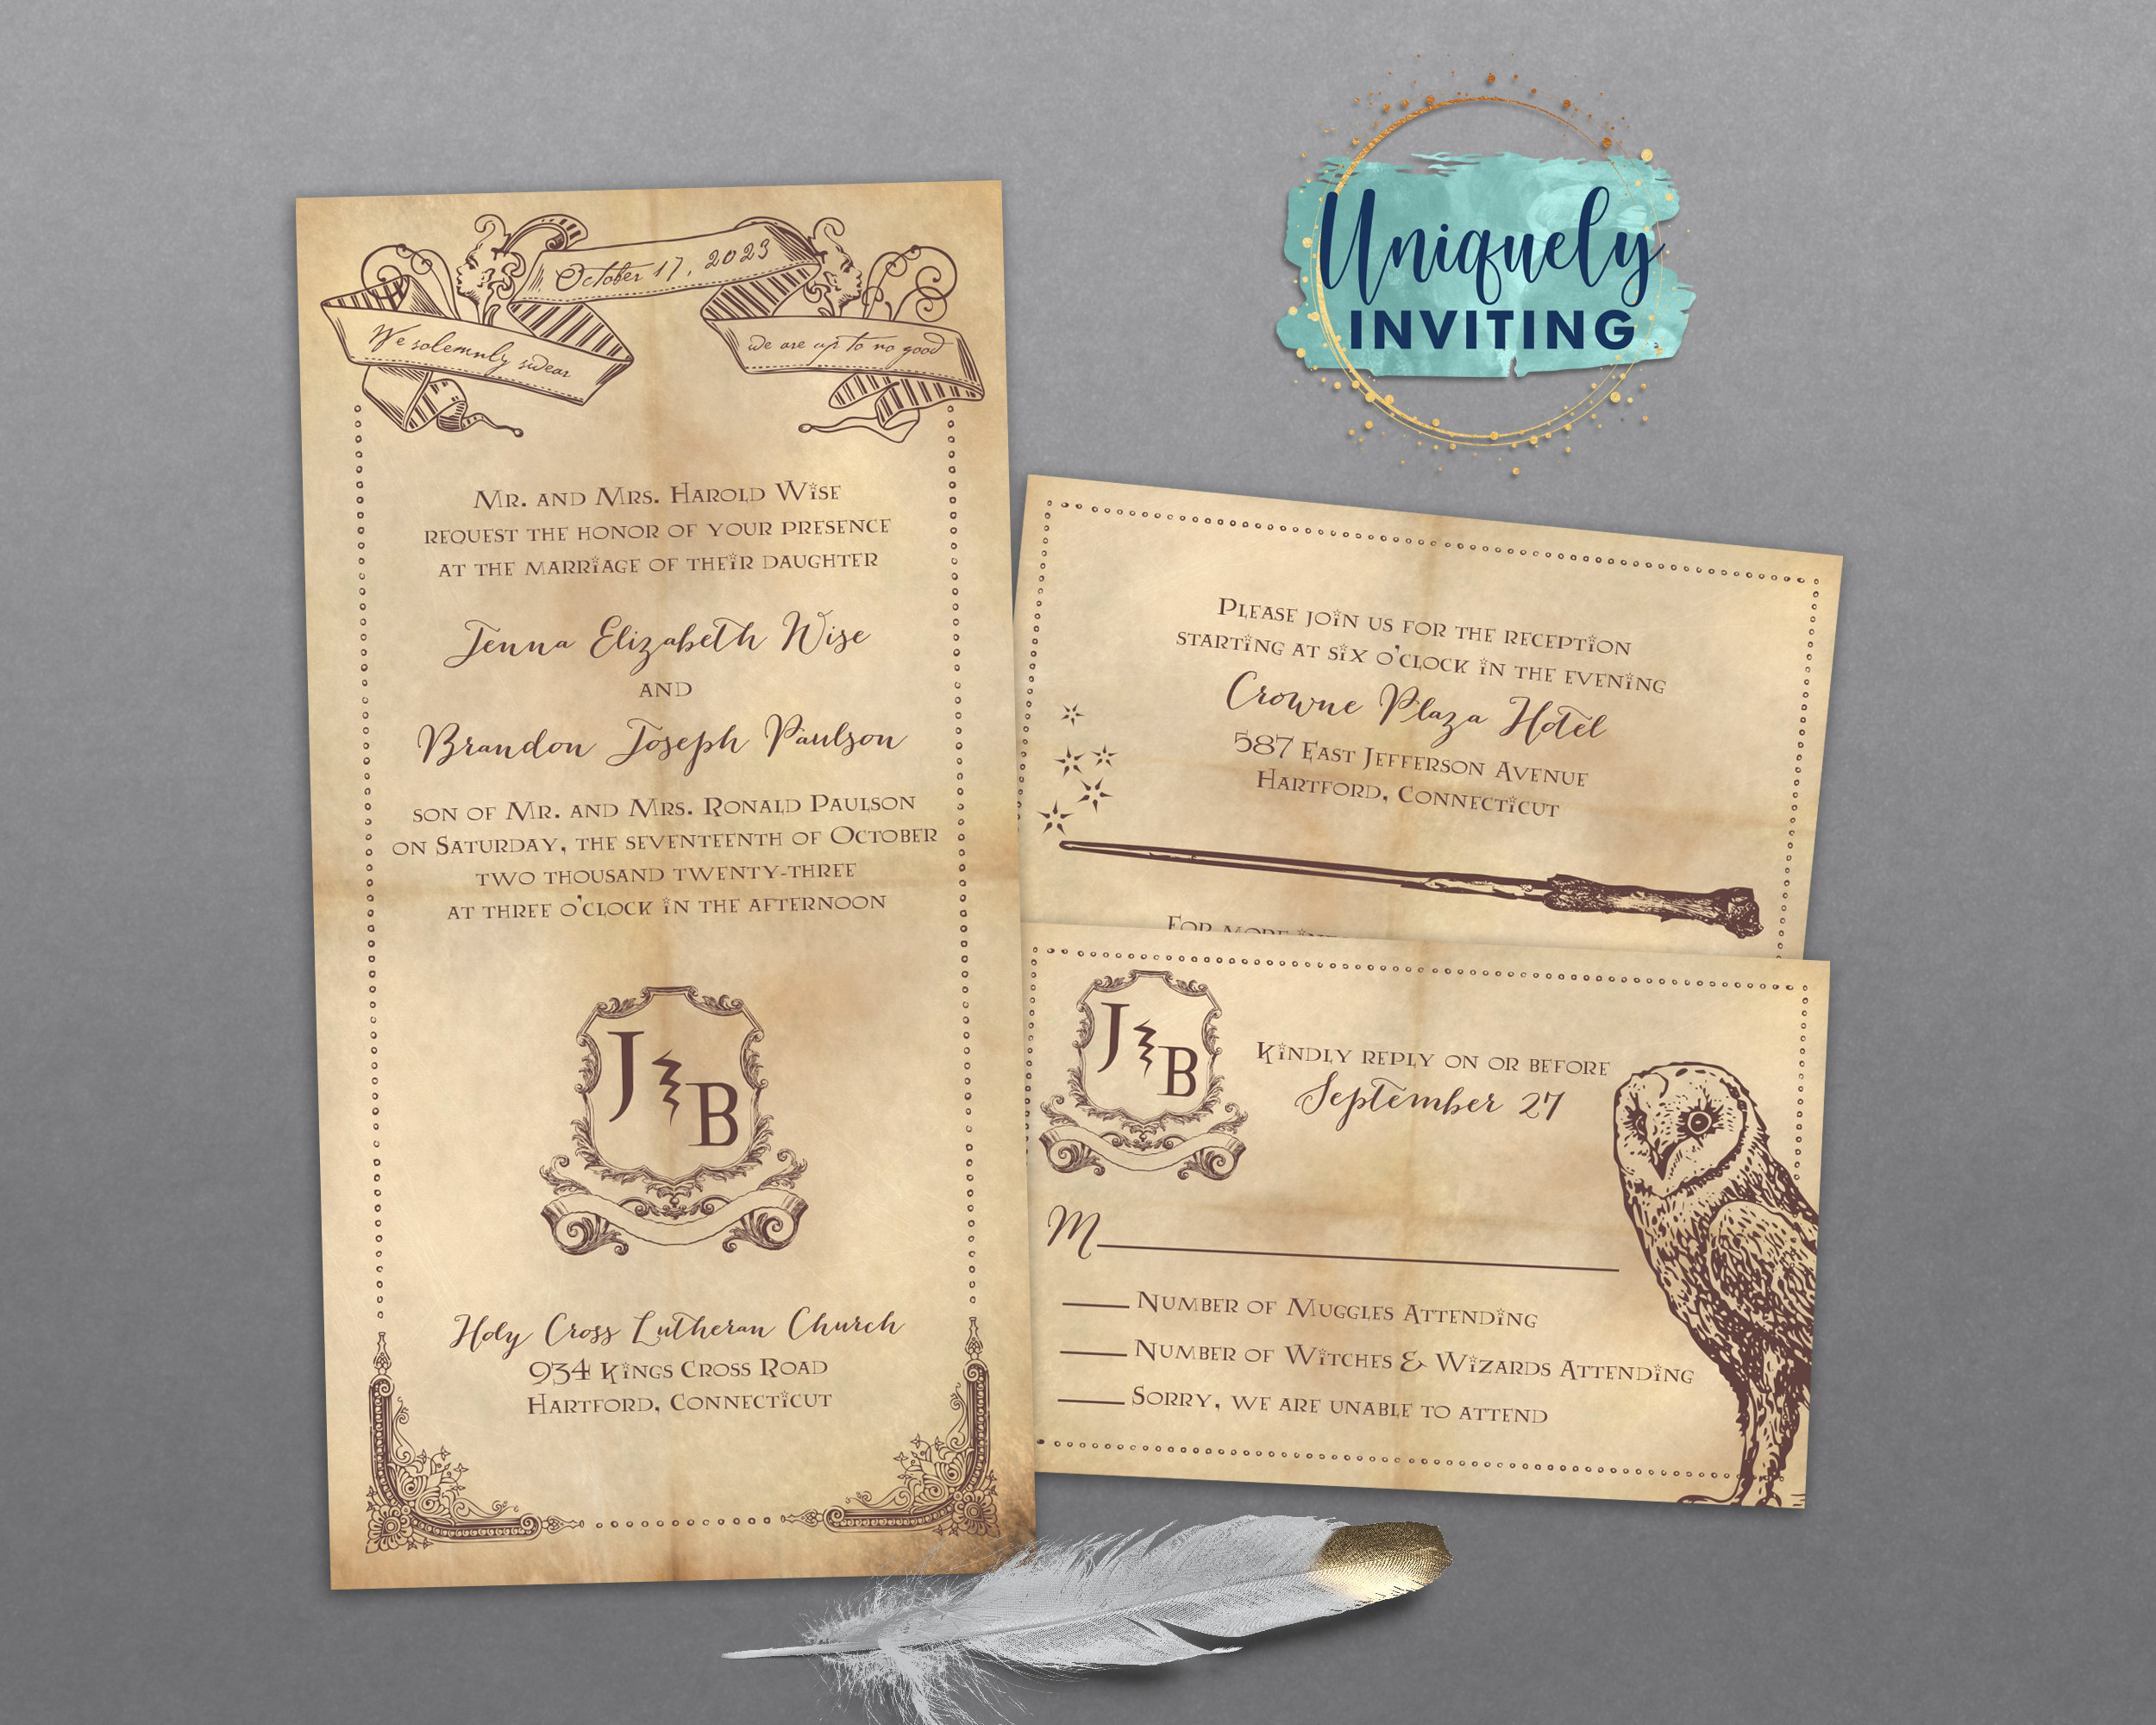 Harry Potter Invitations & Invitation Templates